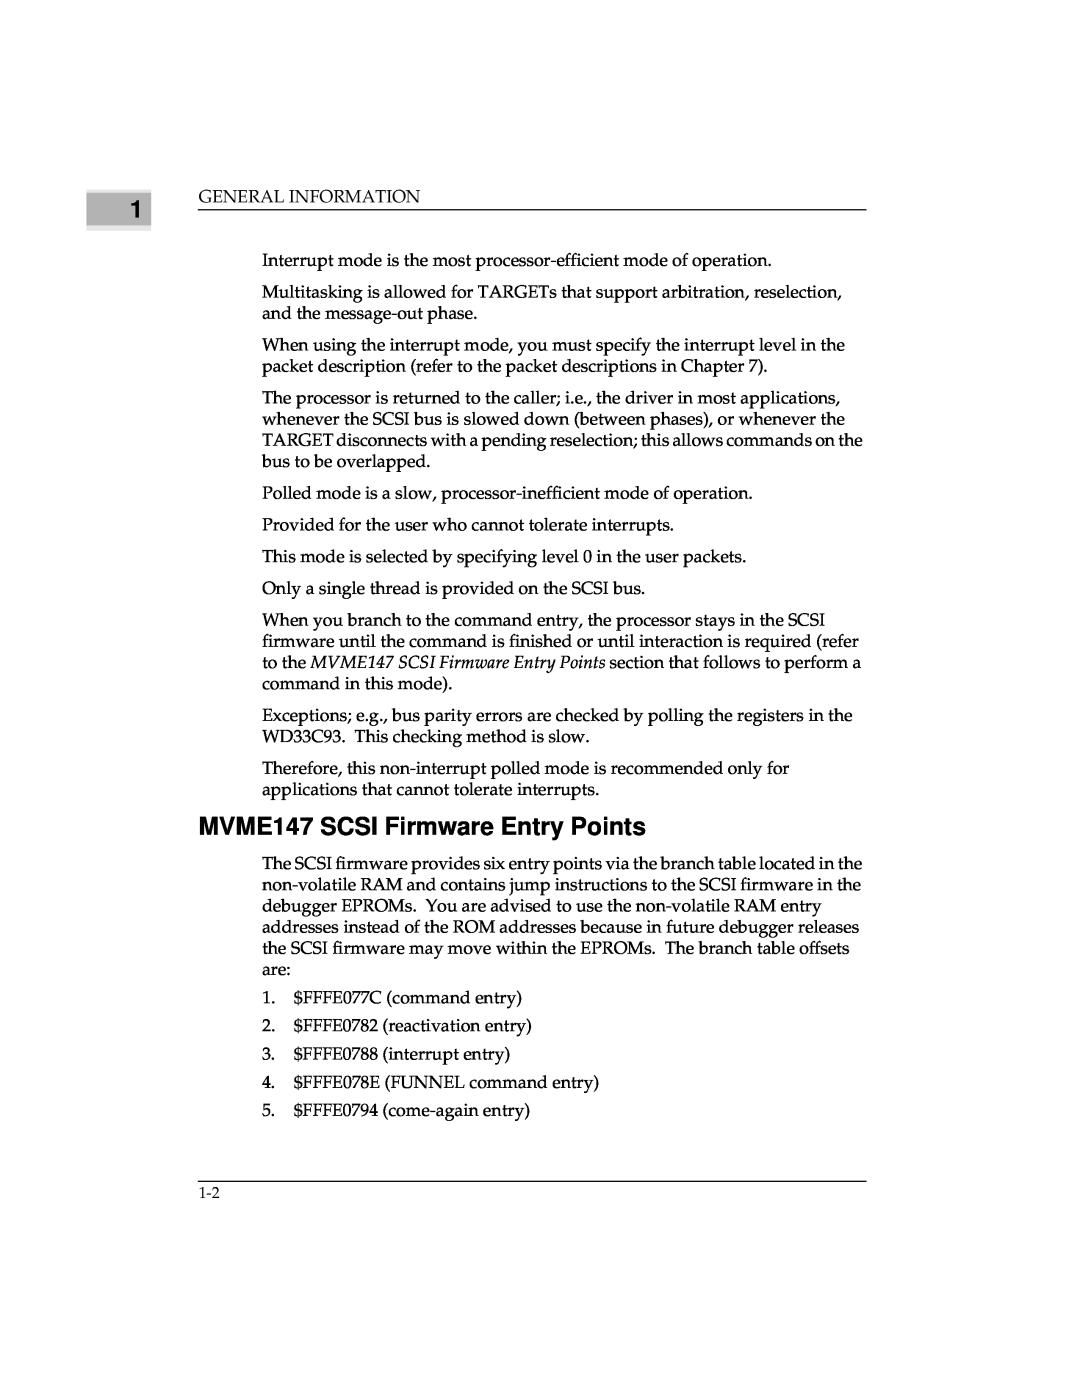 Emerson manual MVME147 SCSI Firmware Entry Points 